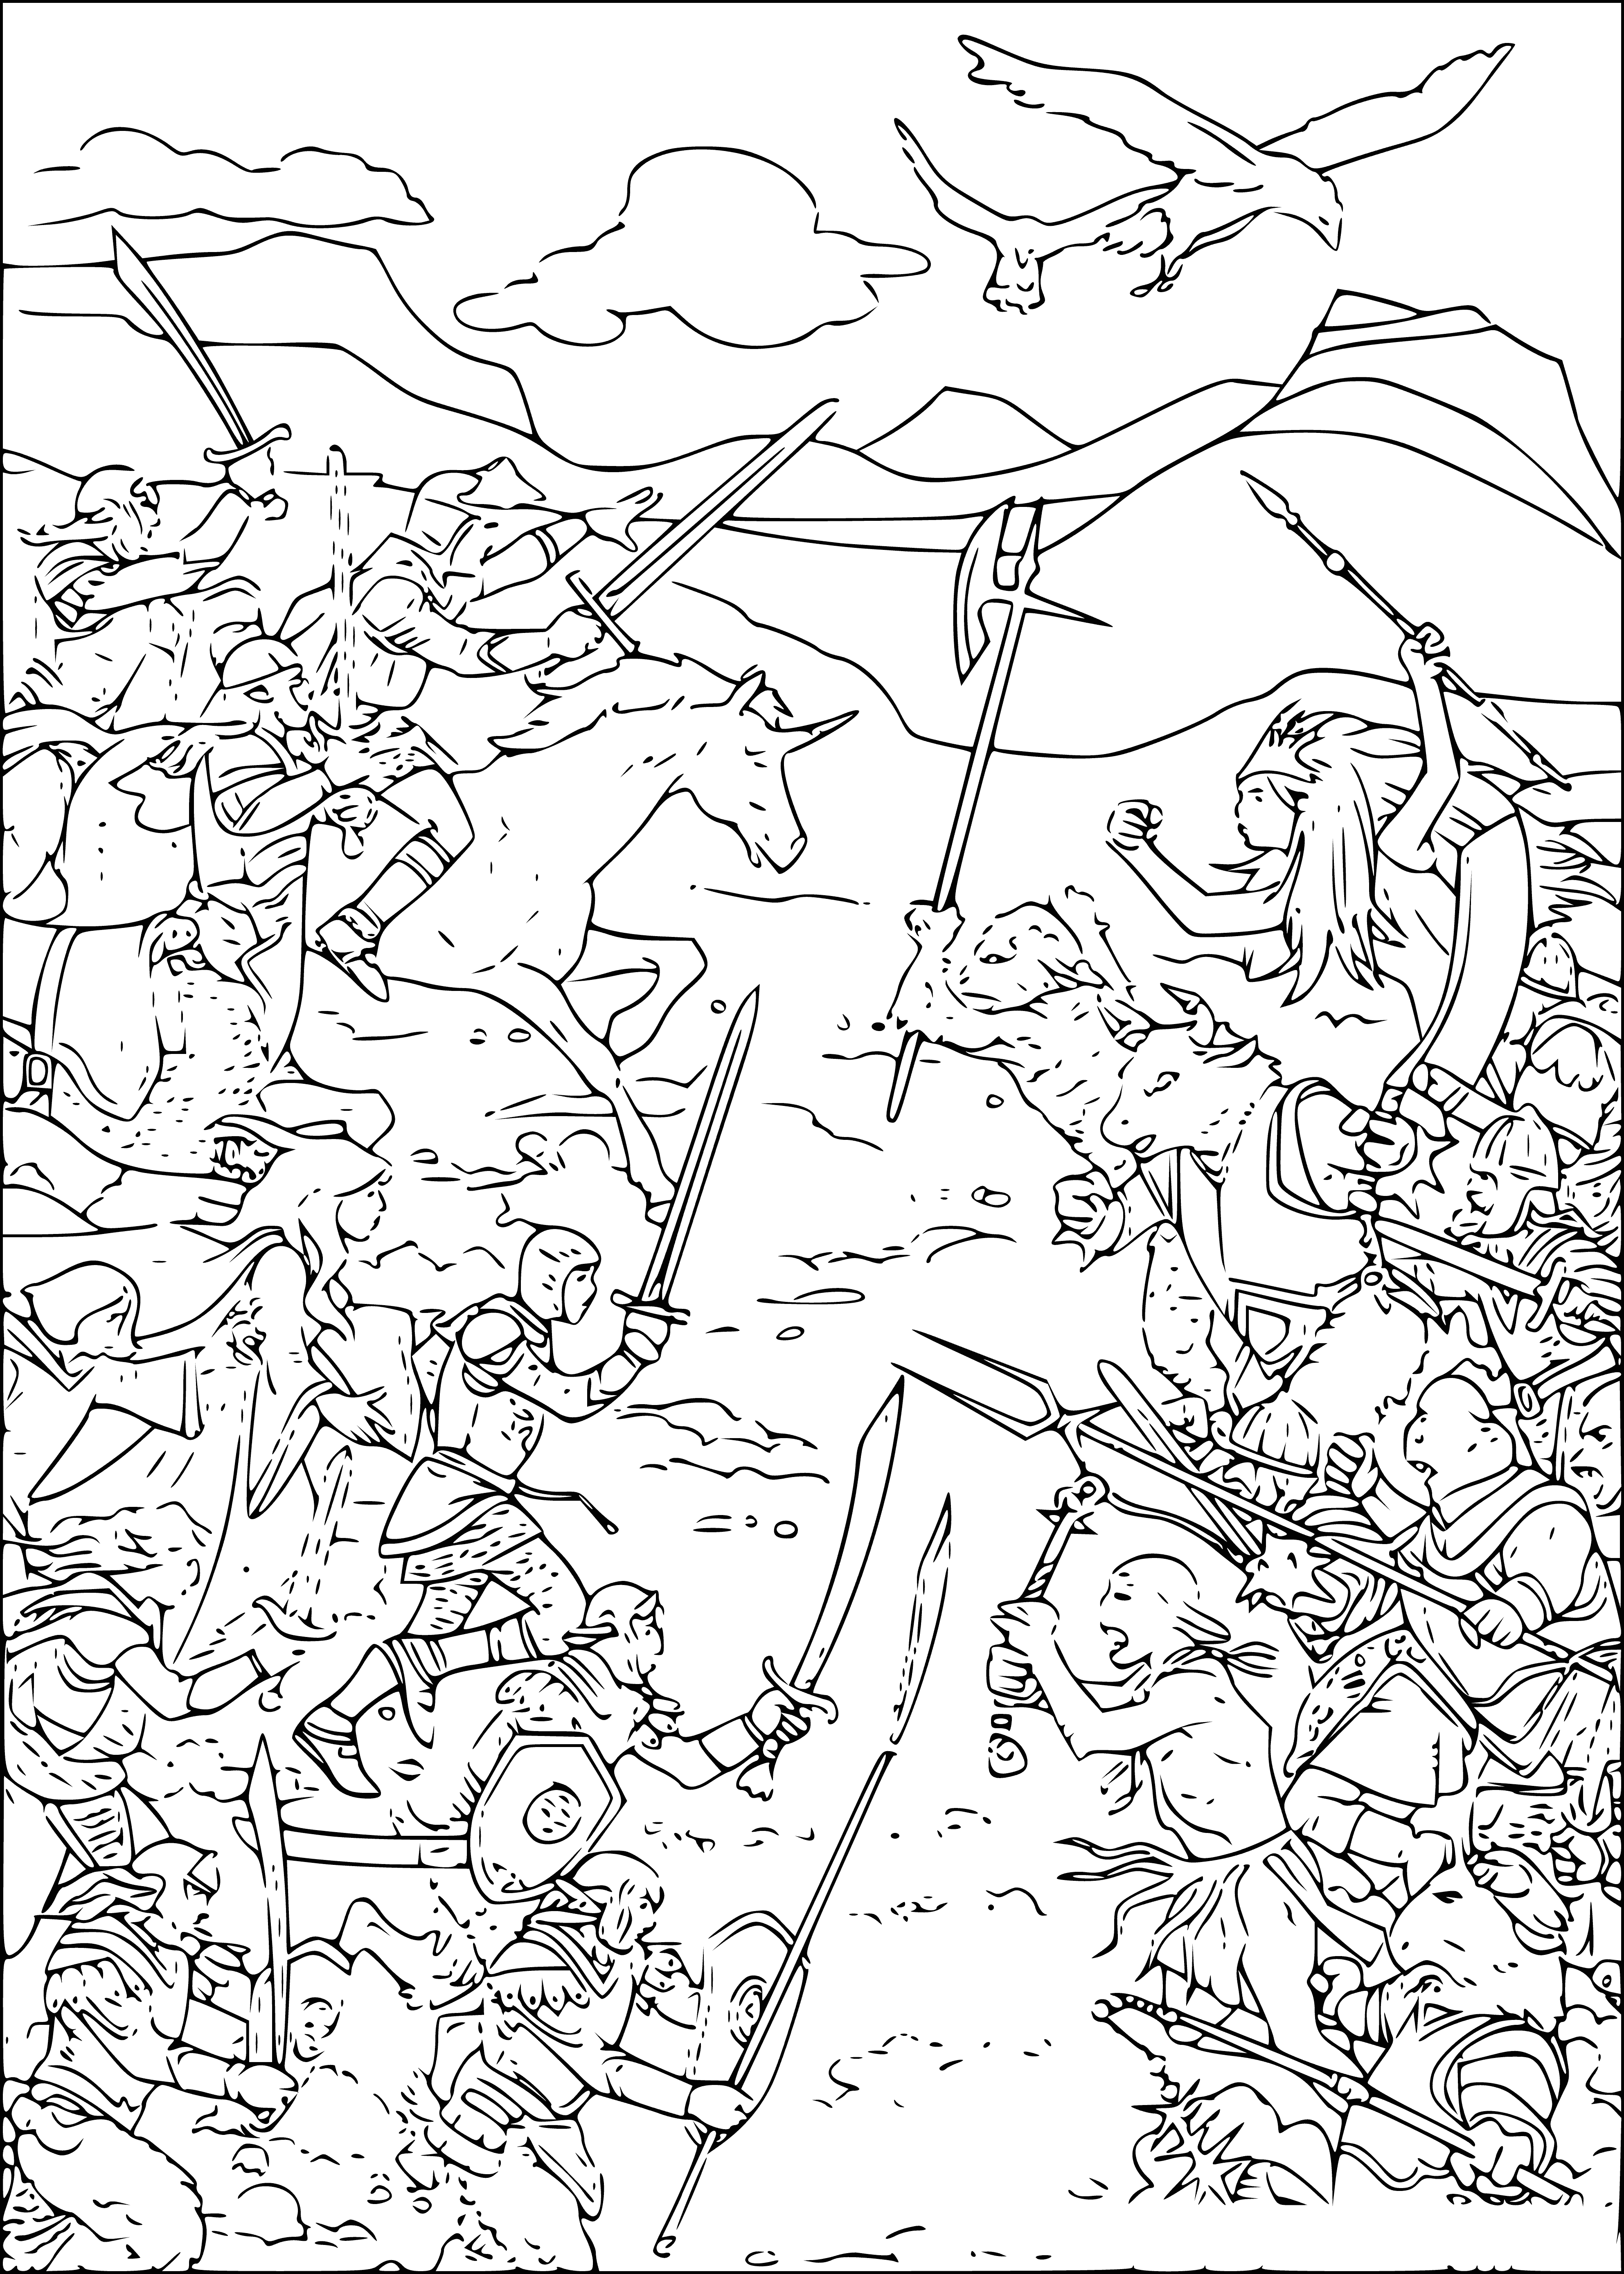 Battle coloring page